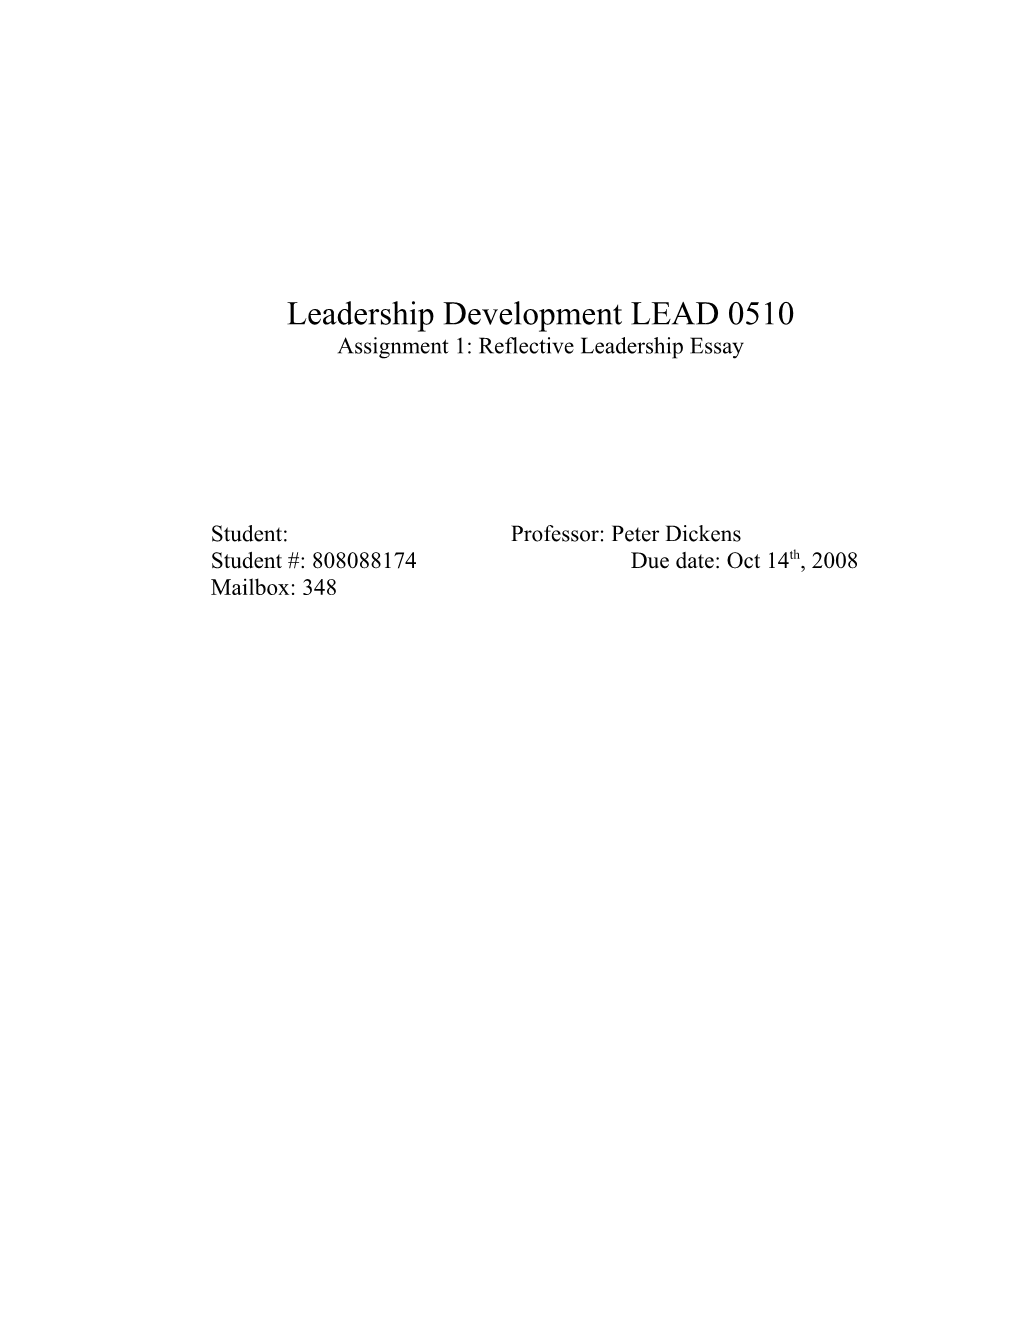 B) Reflective Leadership Essay